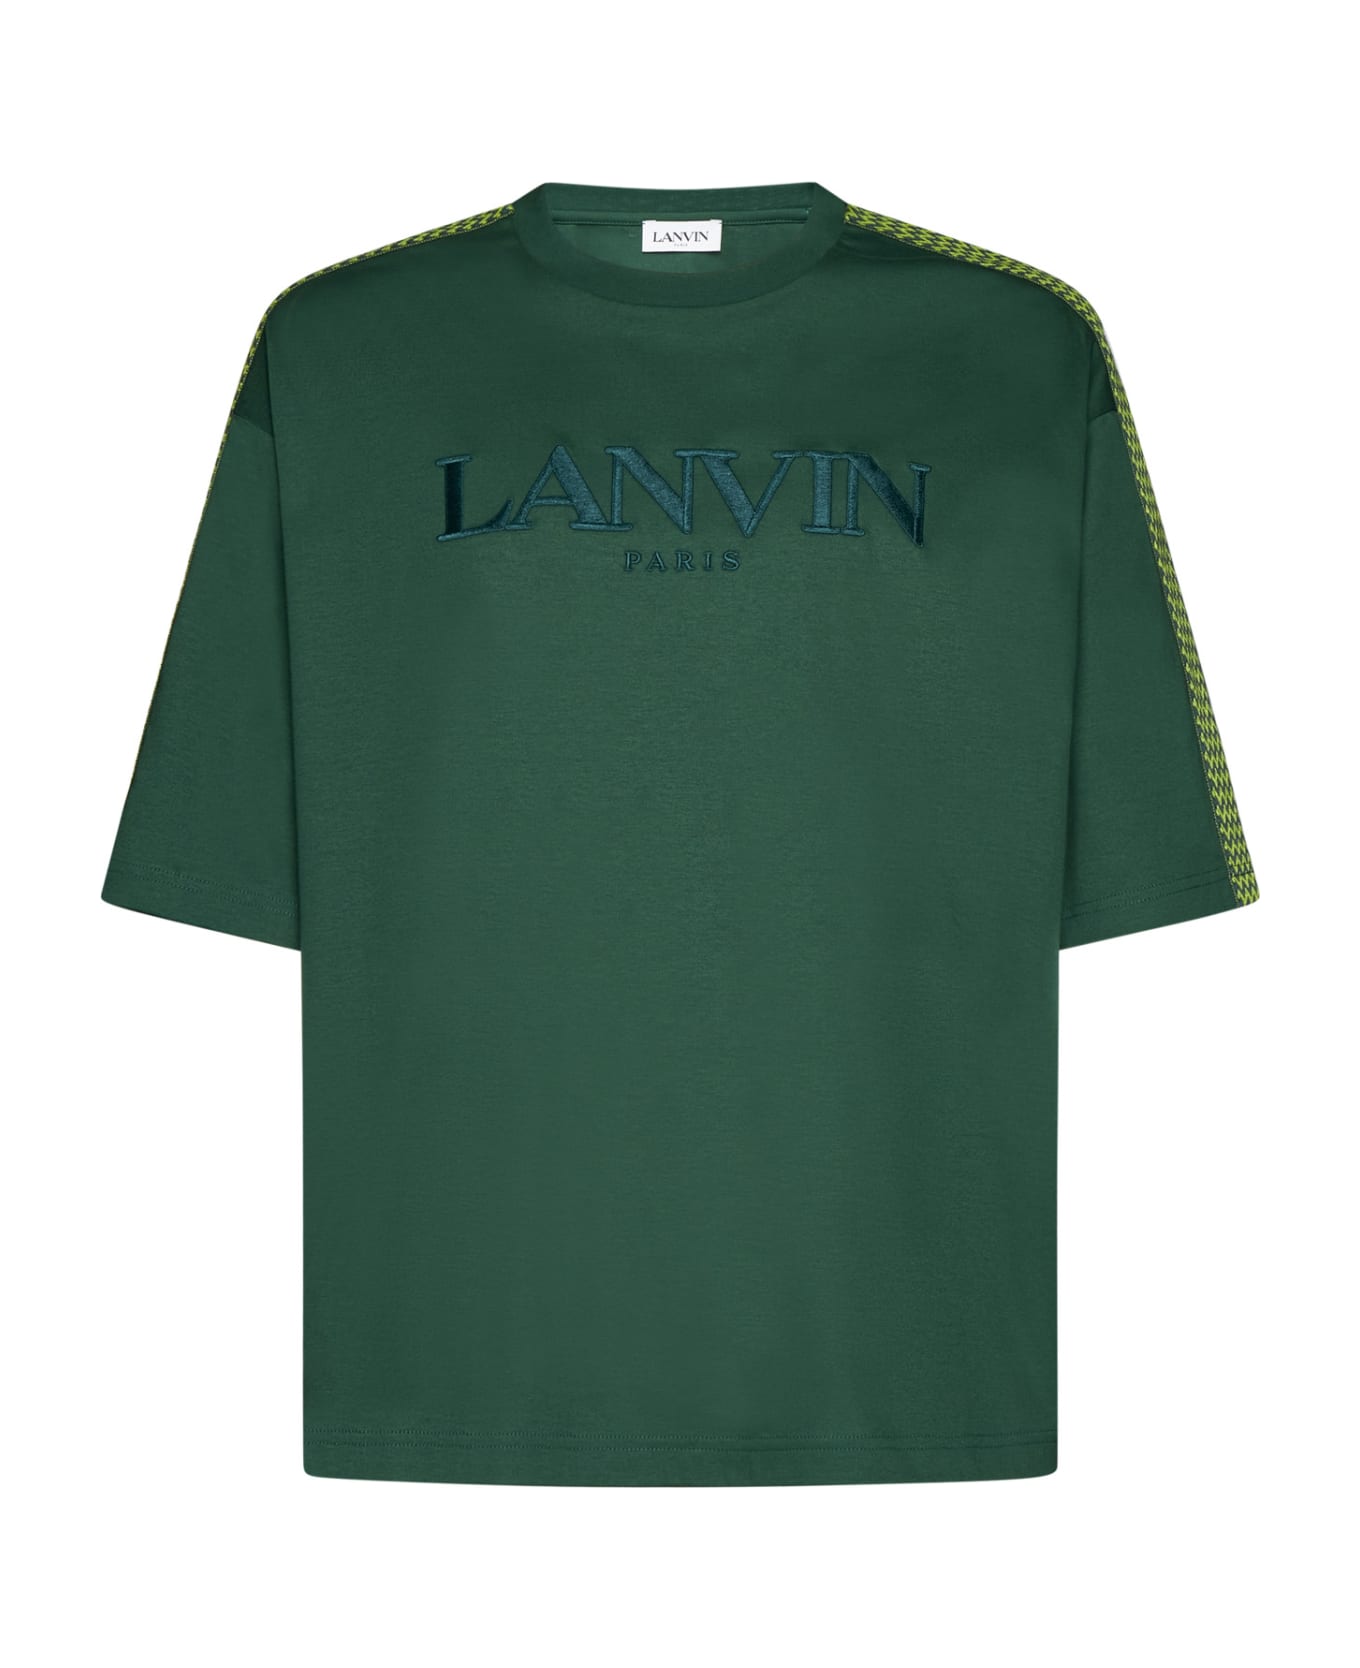 Lanvin T-Shirt - Bottle シャツ